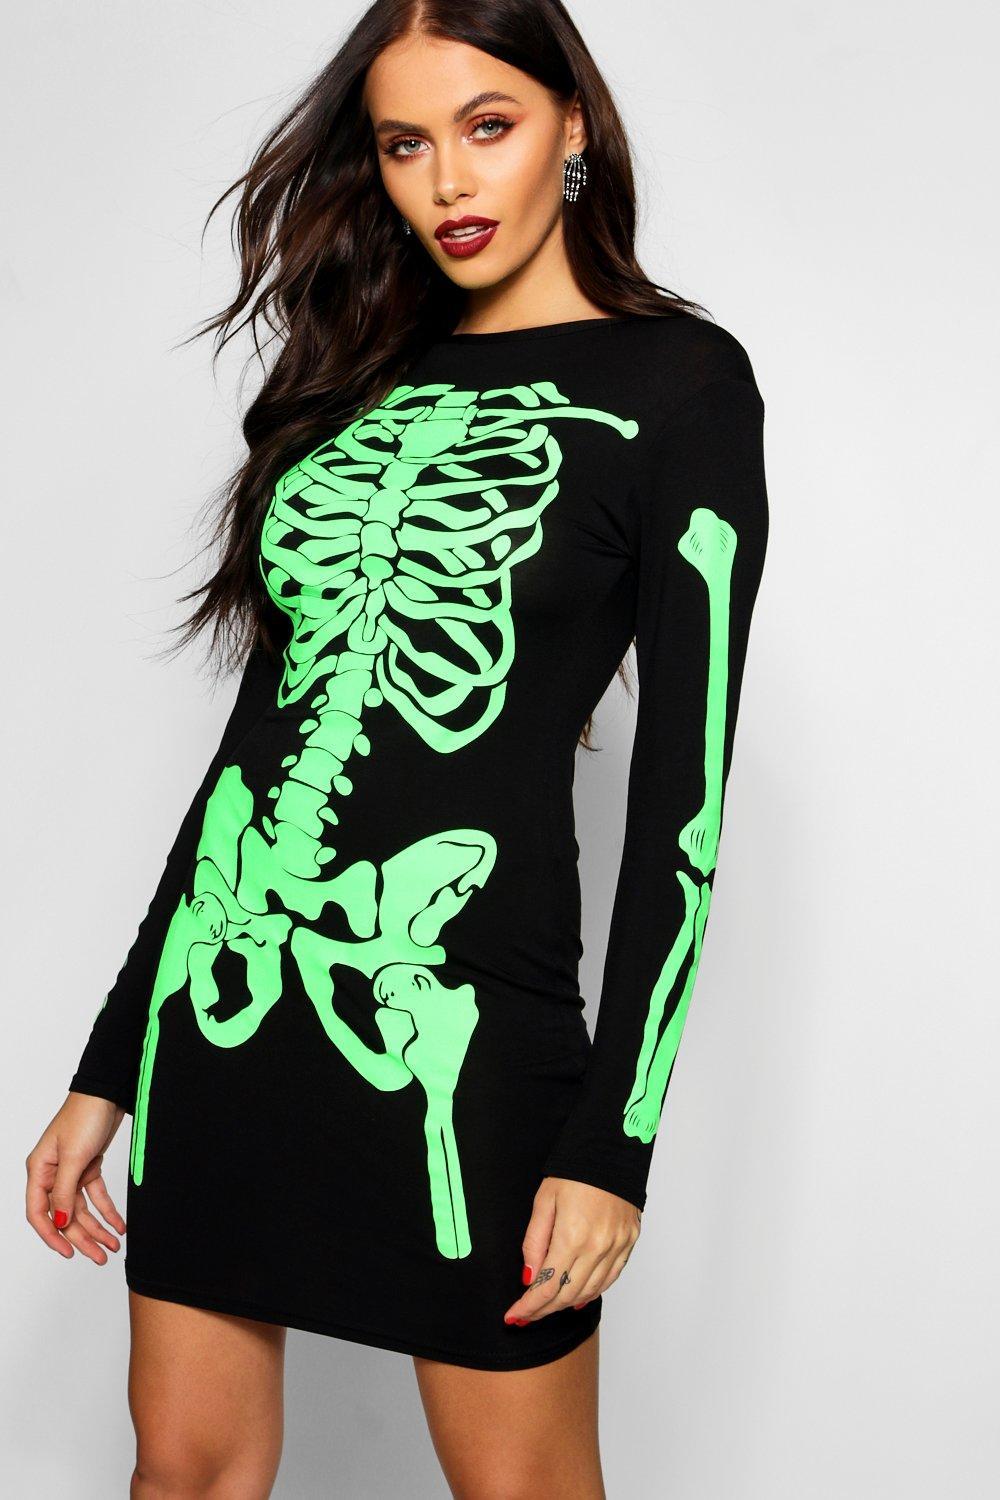 Boohoo Halloween Neon Skeleton Print Bodycon Dress in Black - Lyst